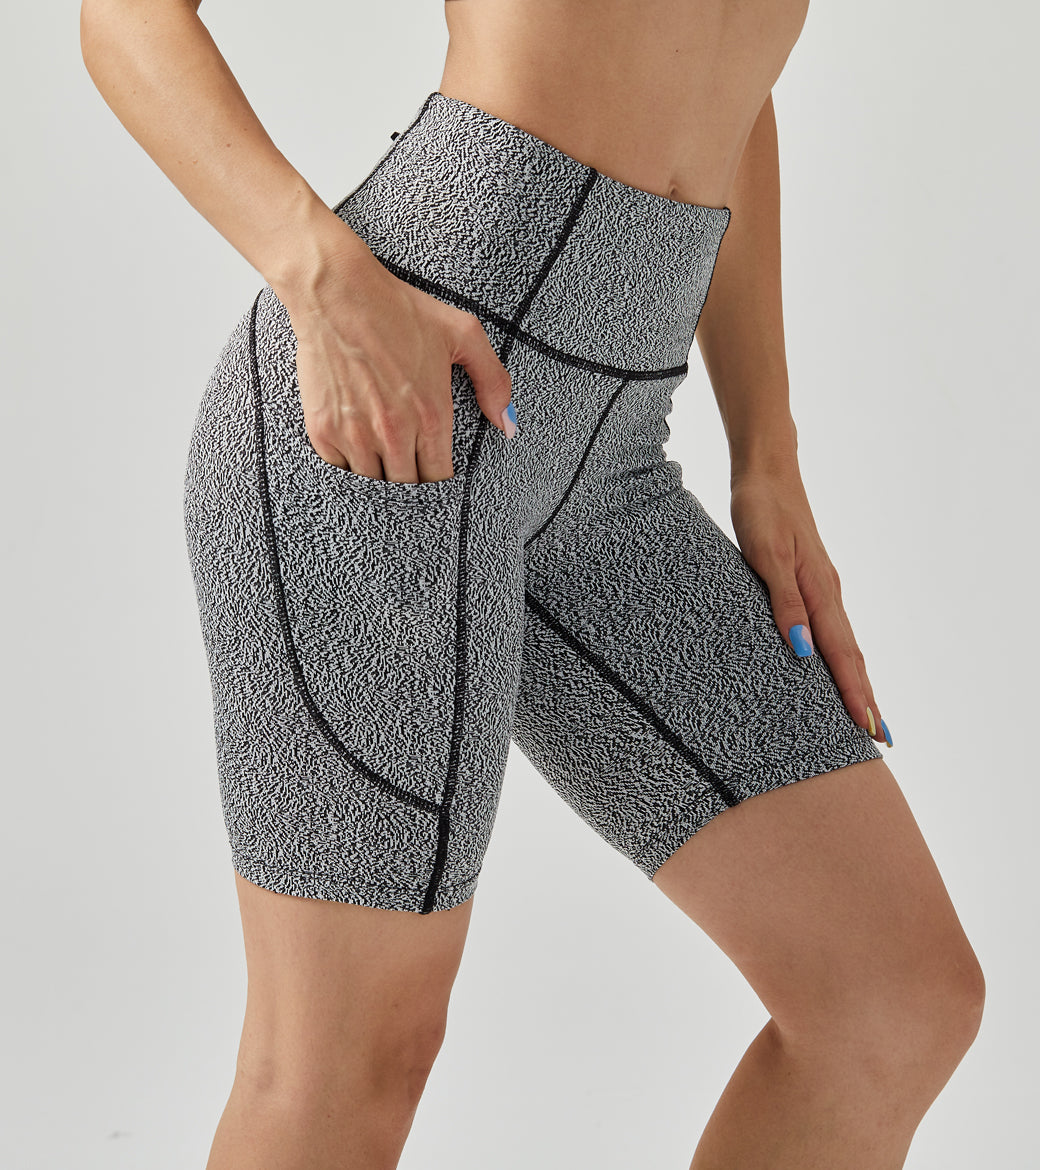 LOVESOFT Women High Waist Yoga Workout Shorts with Pockets 8" Booty Running Bike Shorts